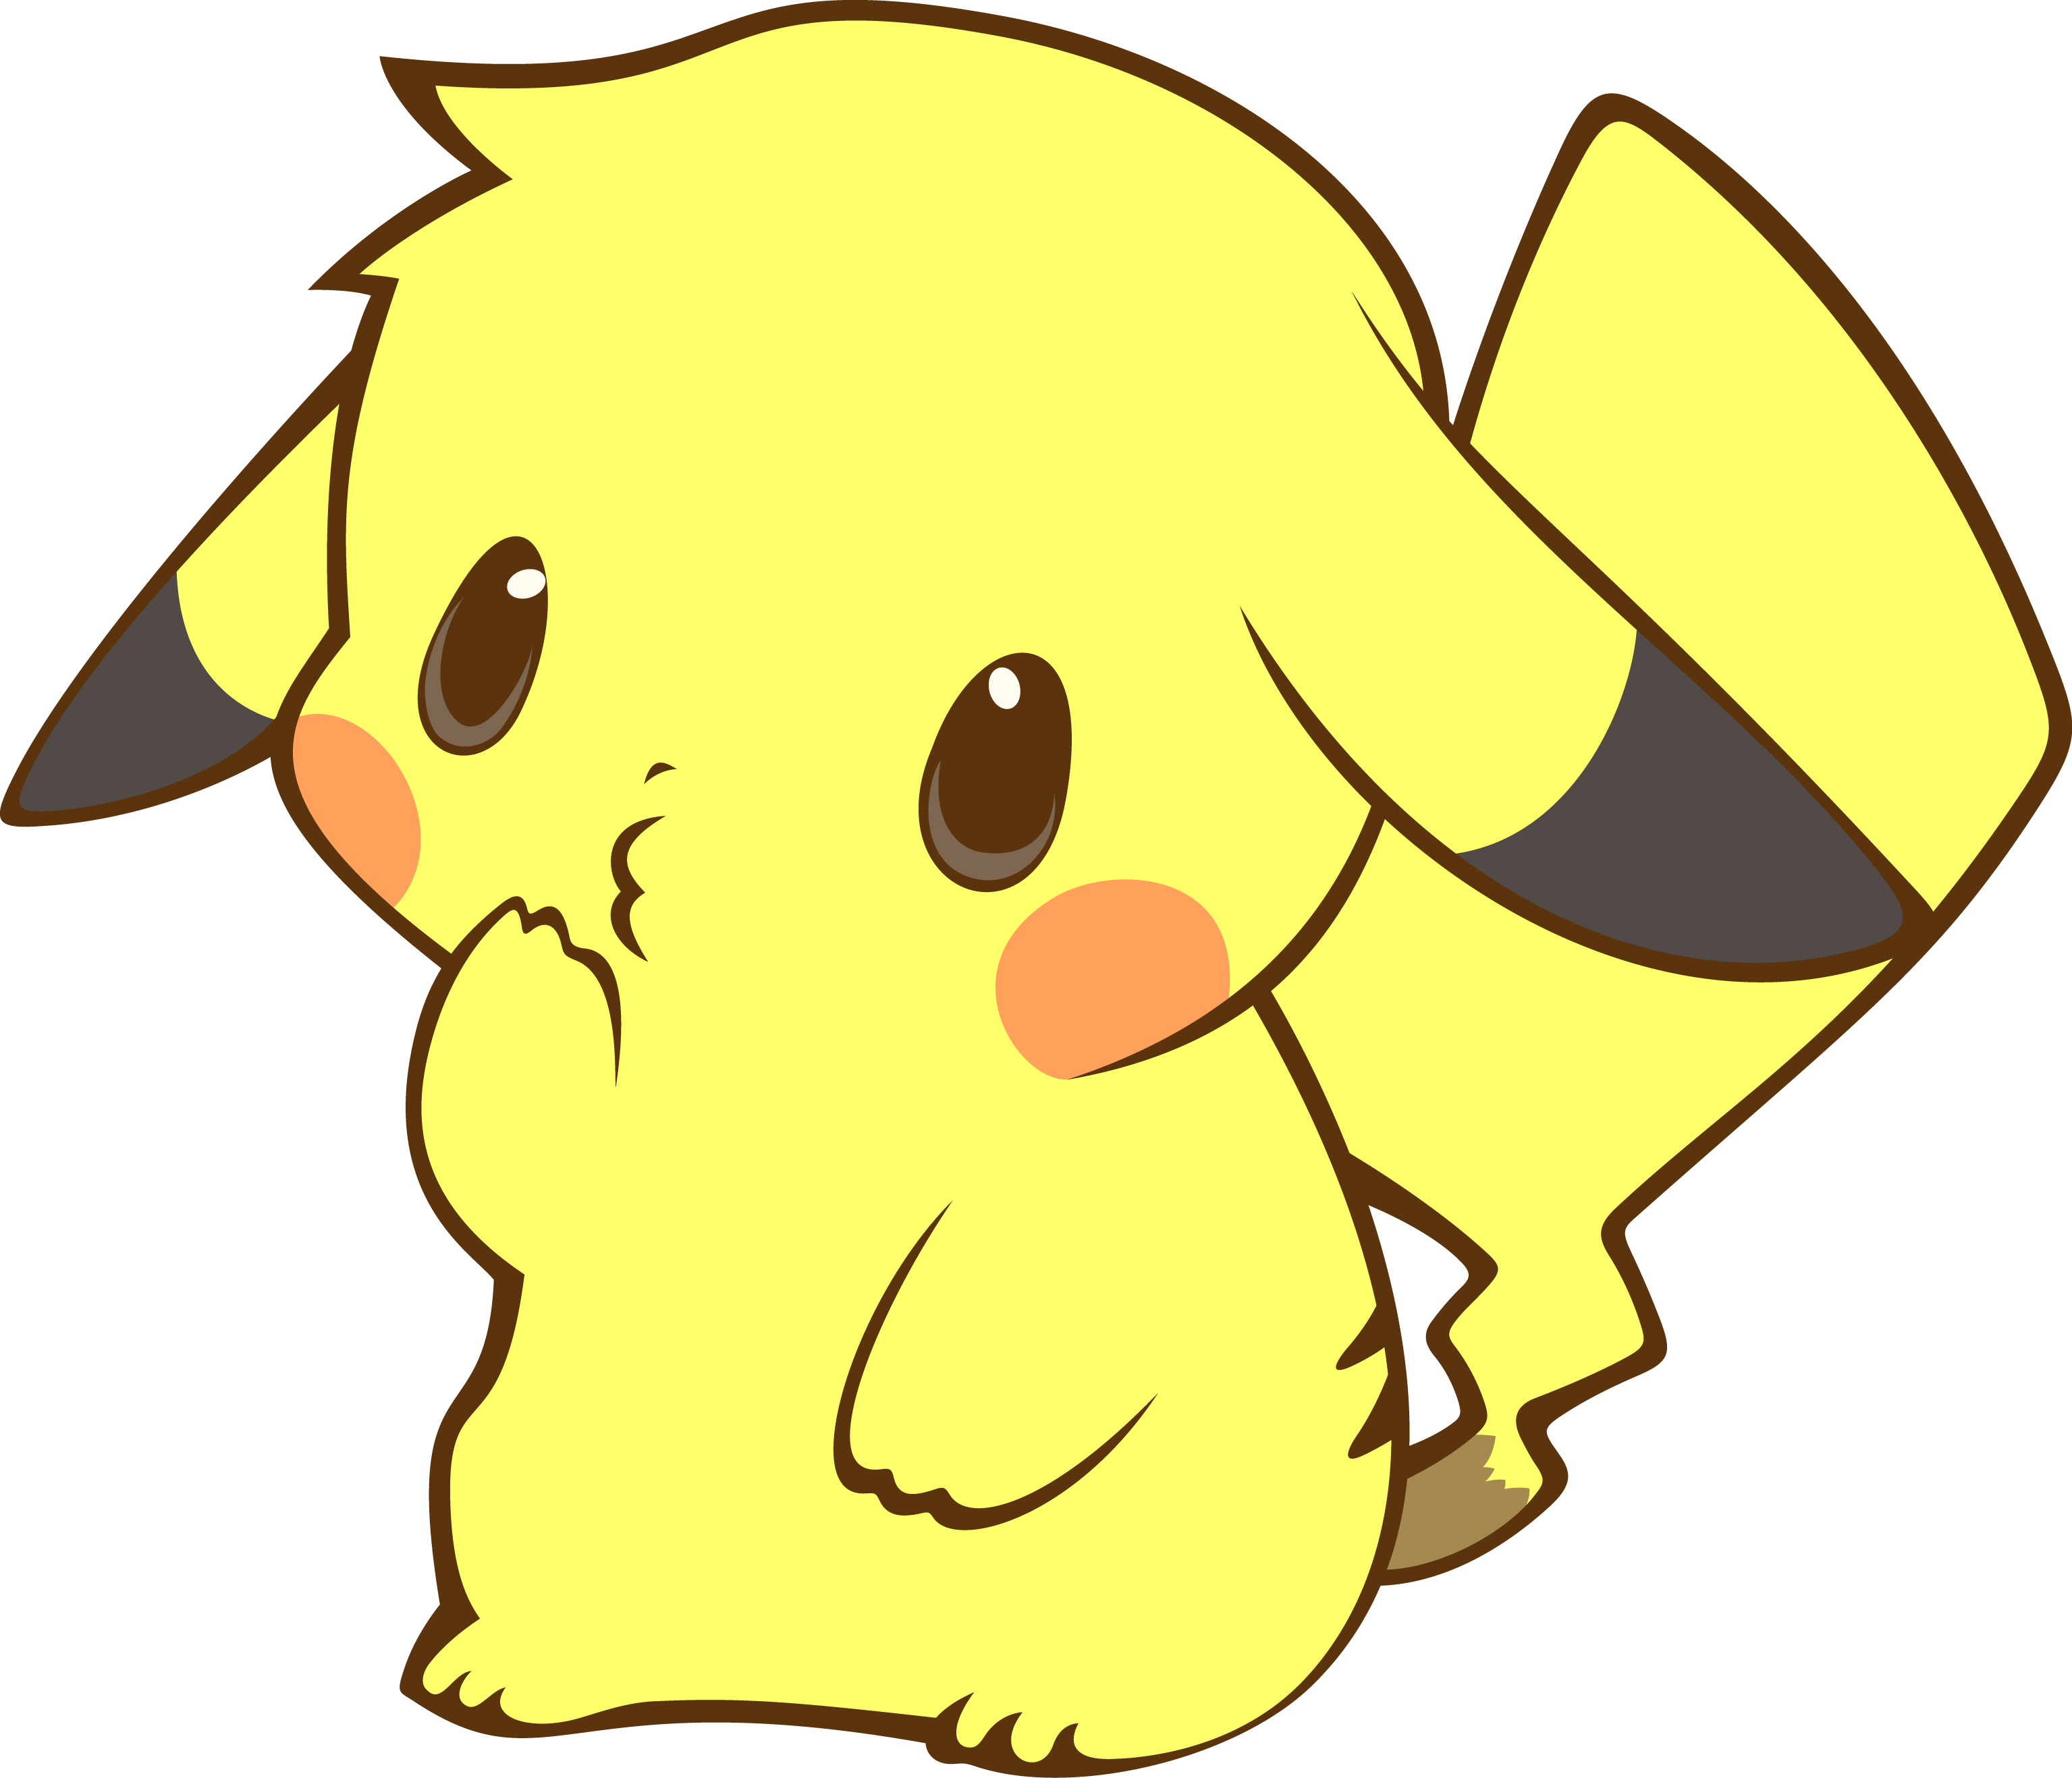 Free Cute Pikachu Wallpaper For iPhone at Movies Monodomo